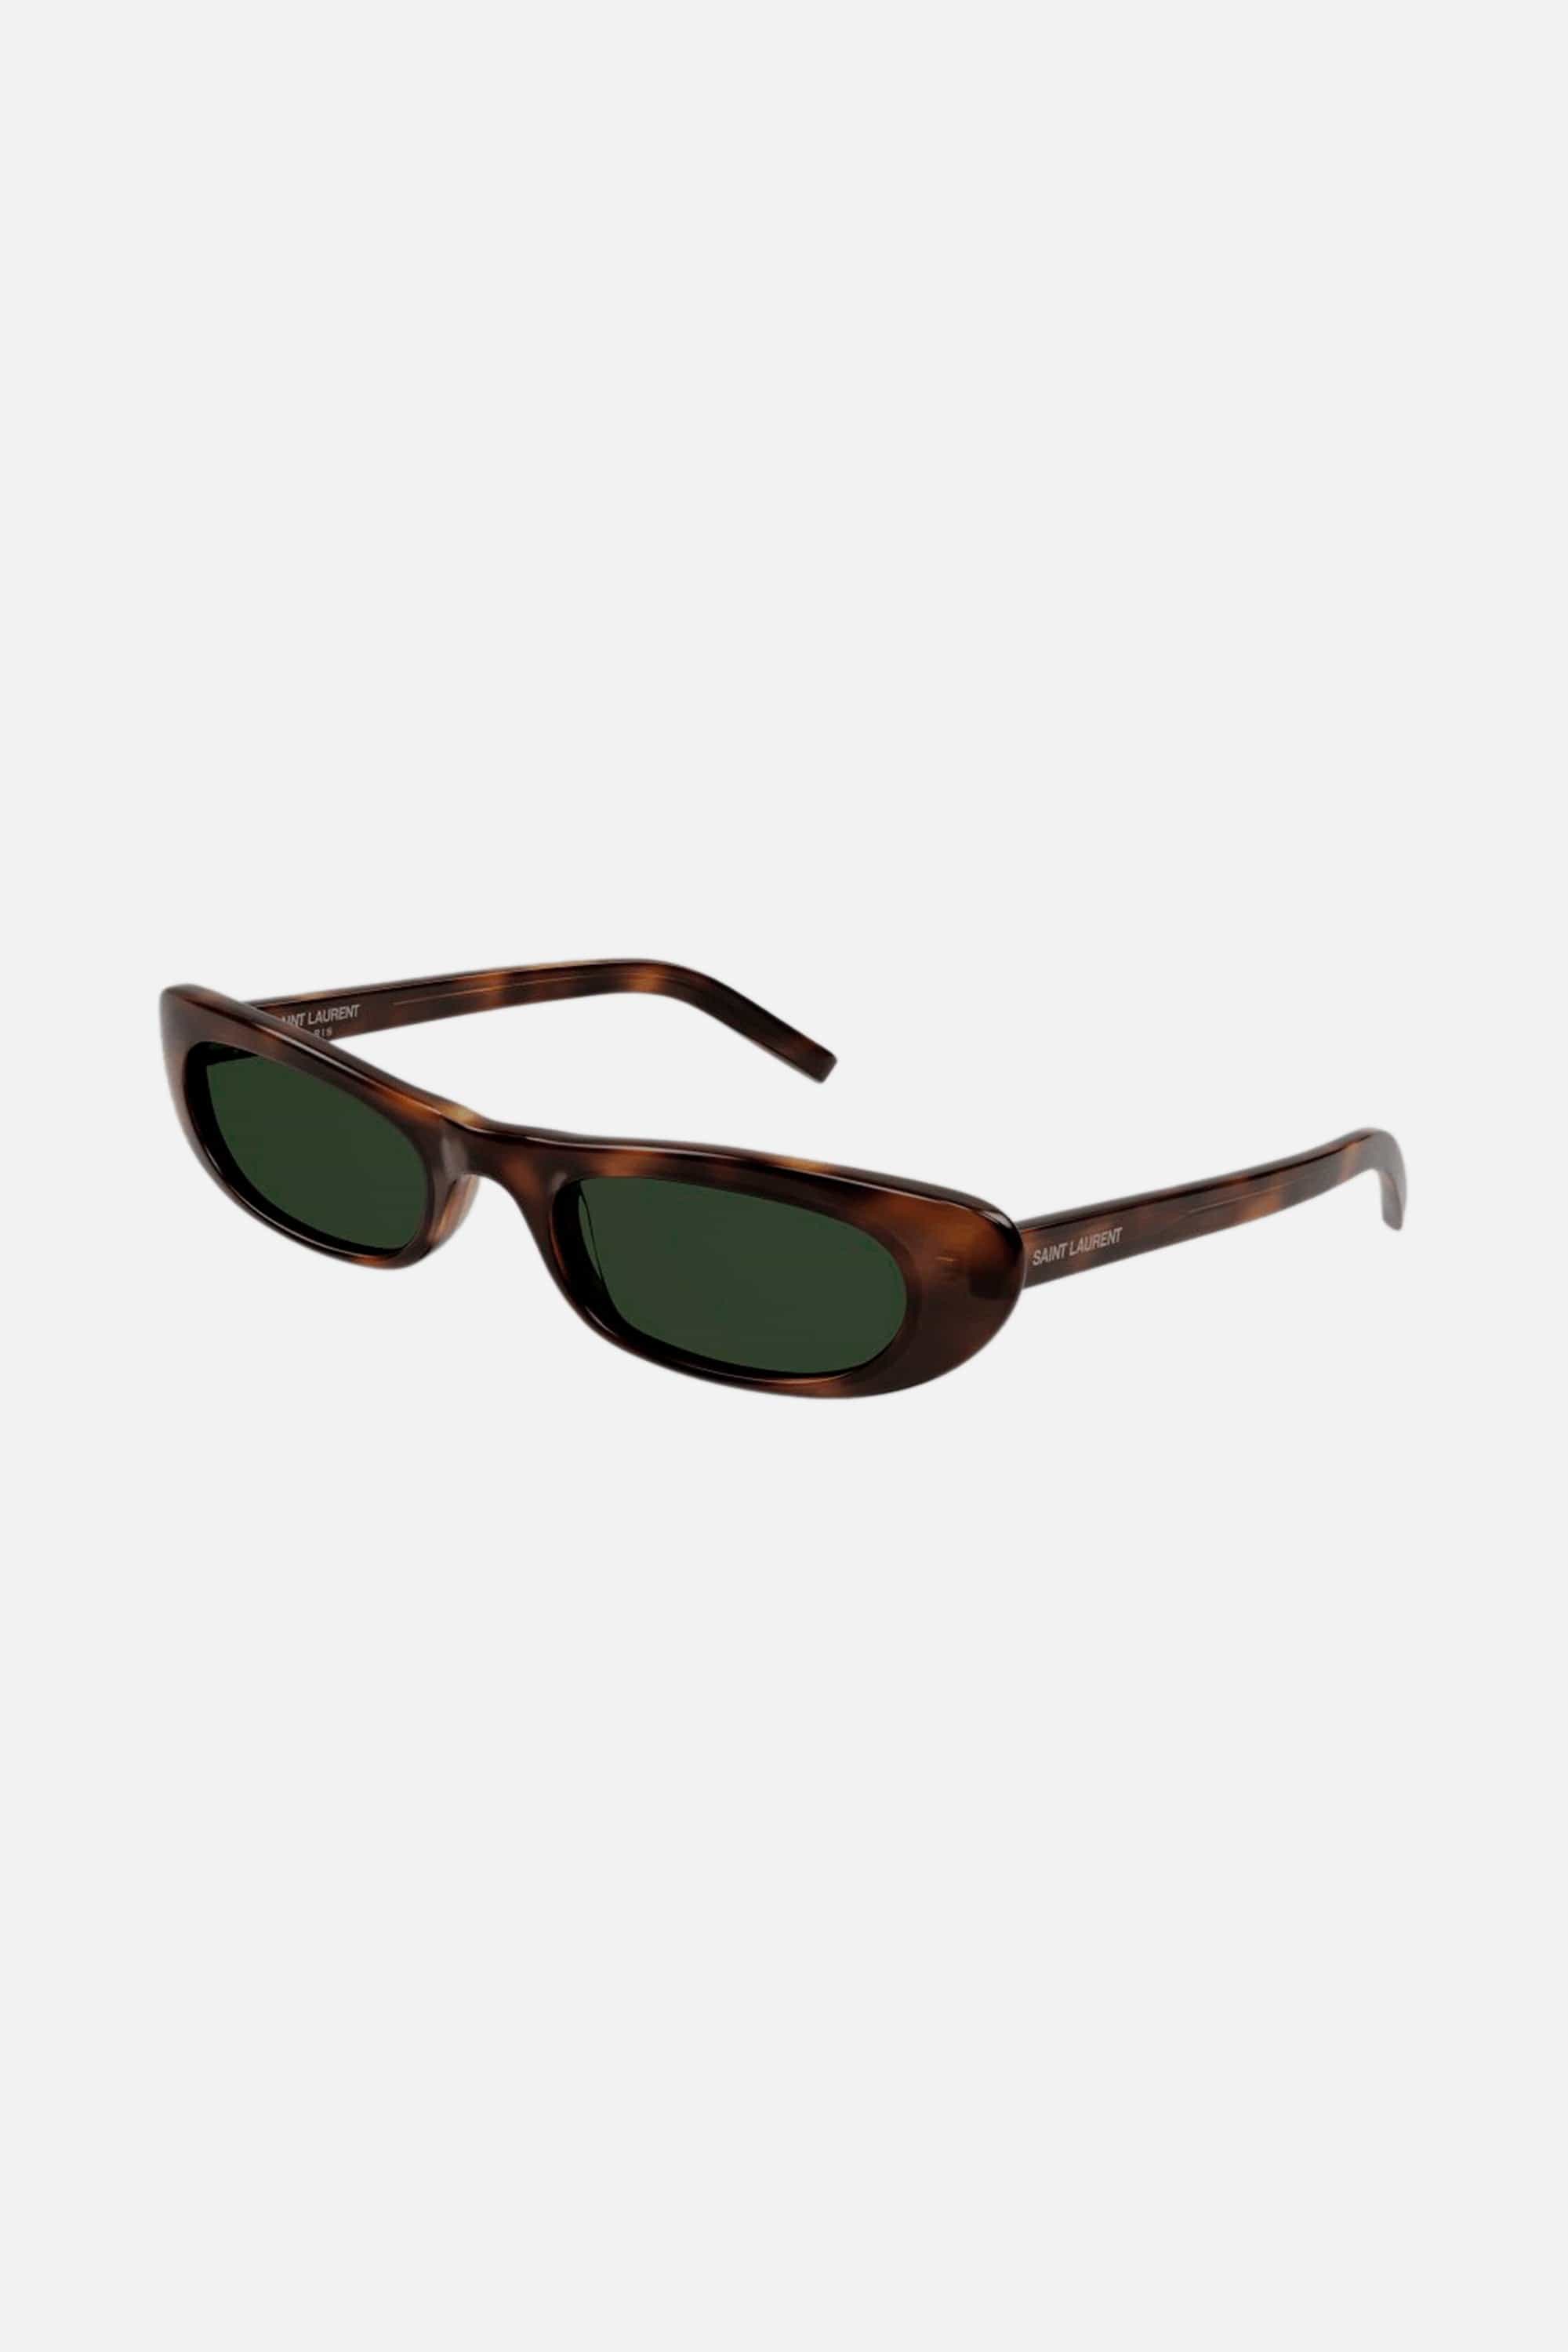 Saint Laurent SL 557 SHADE havana sunglasses - Eyewear Club